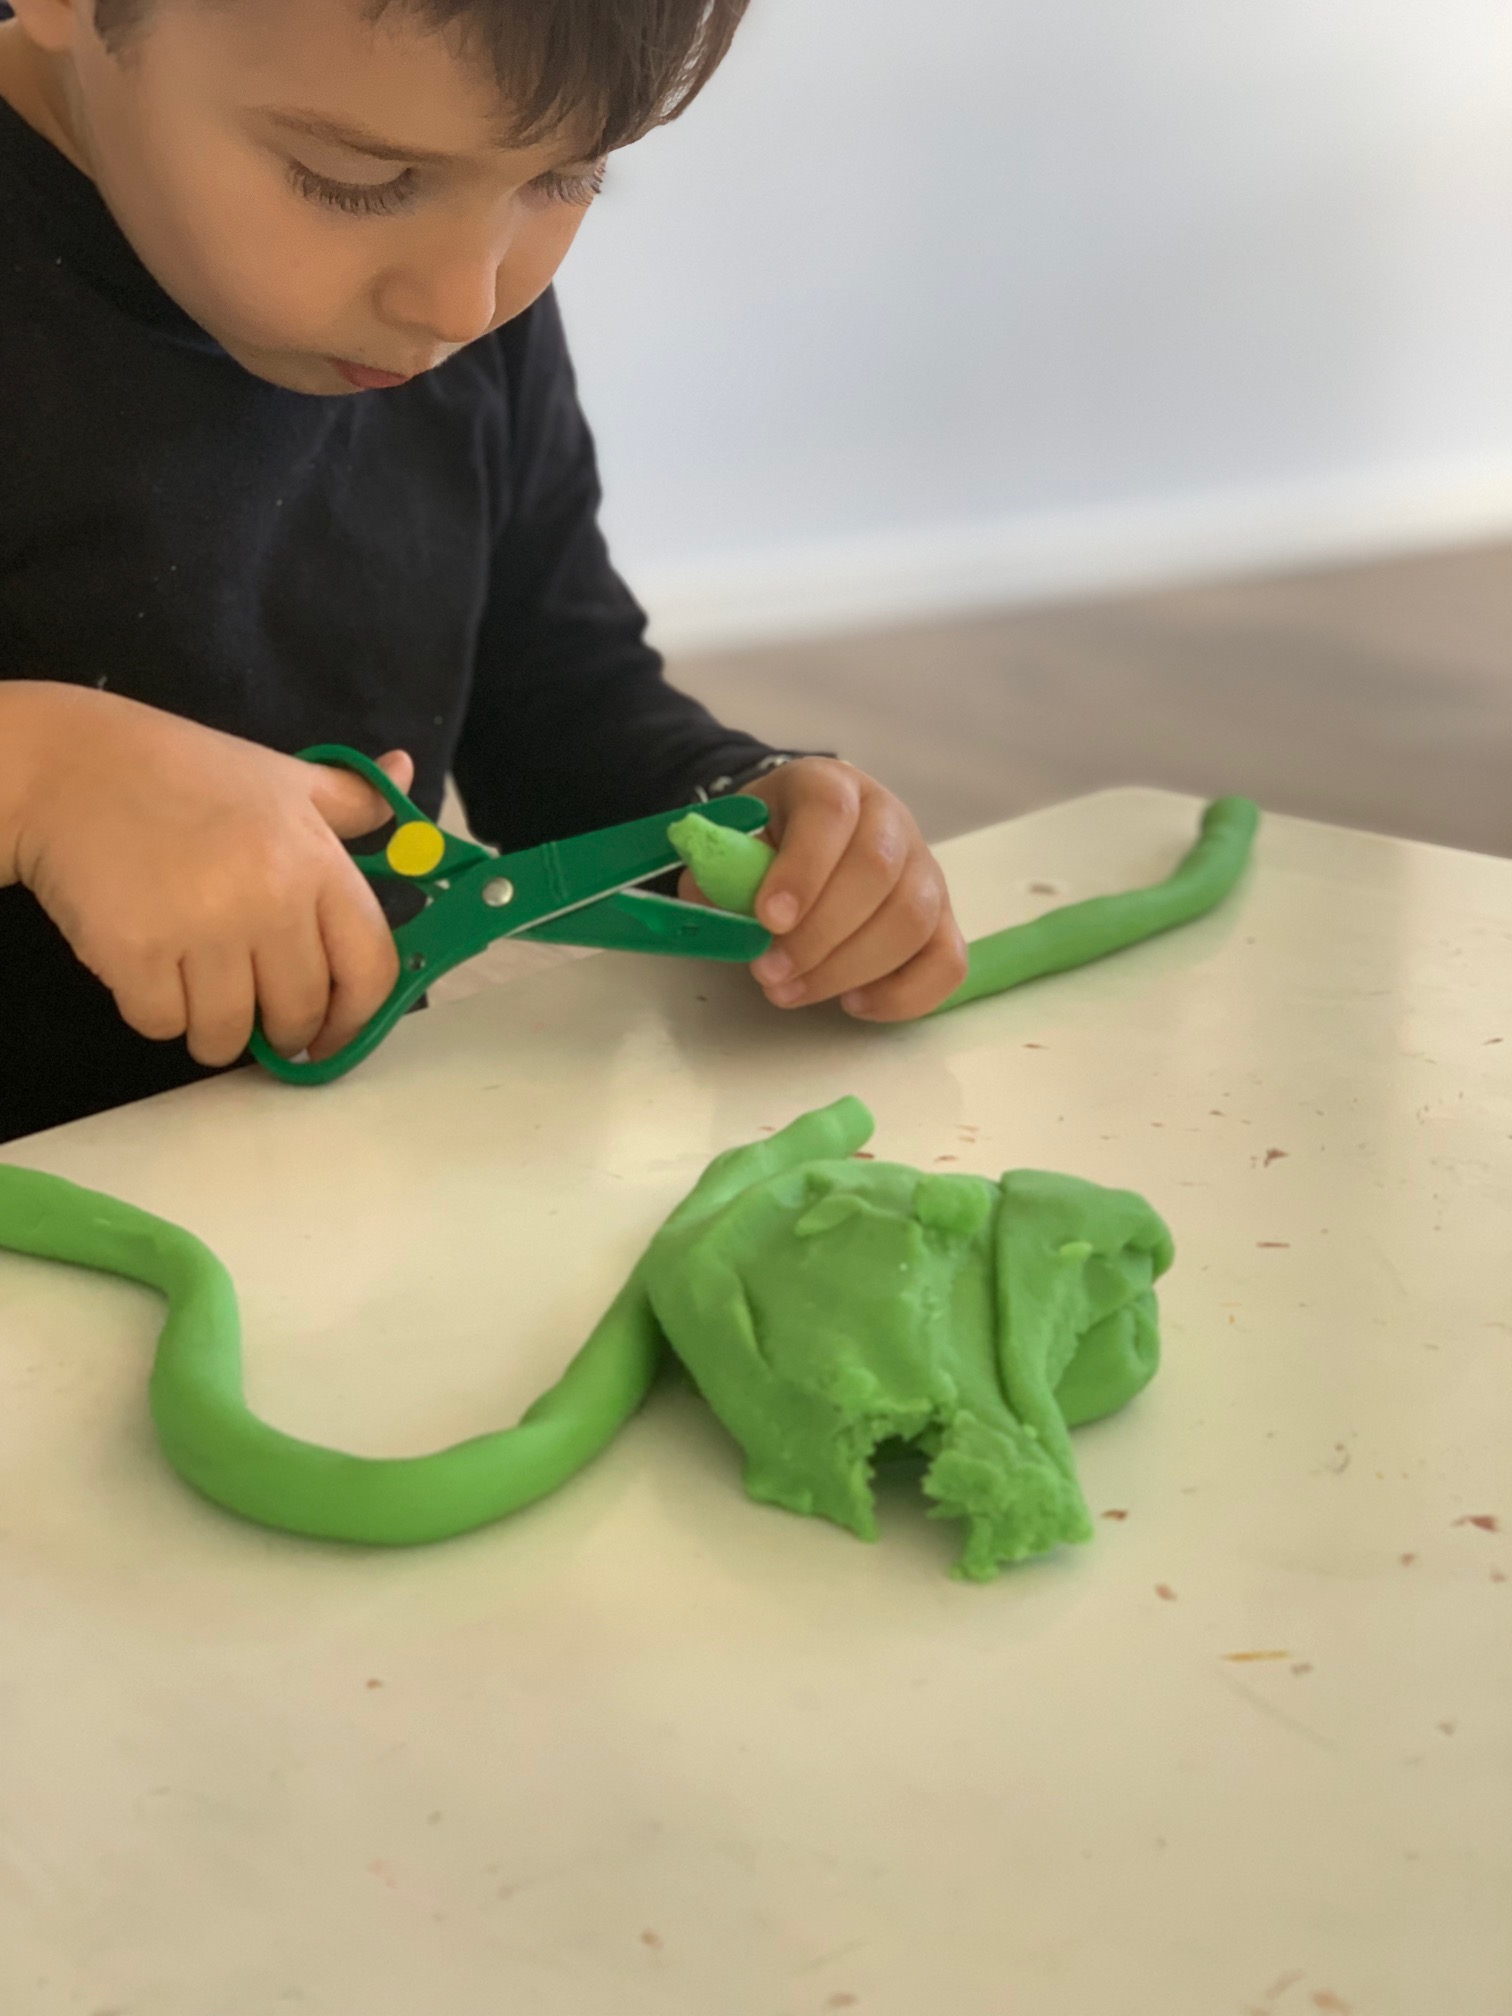 Scissor practices for preschoolers: Yarn play dough person 